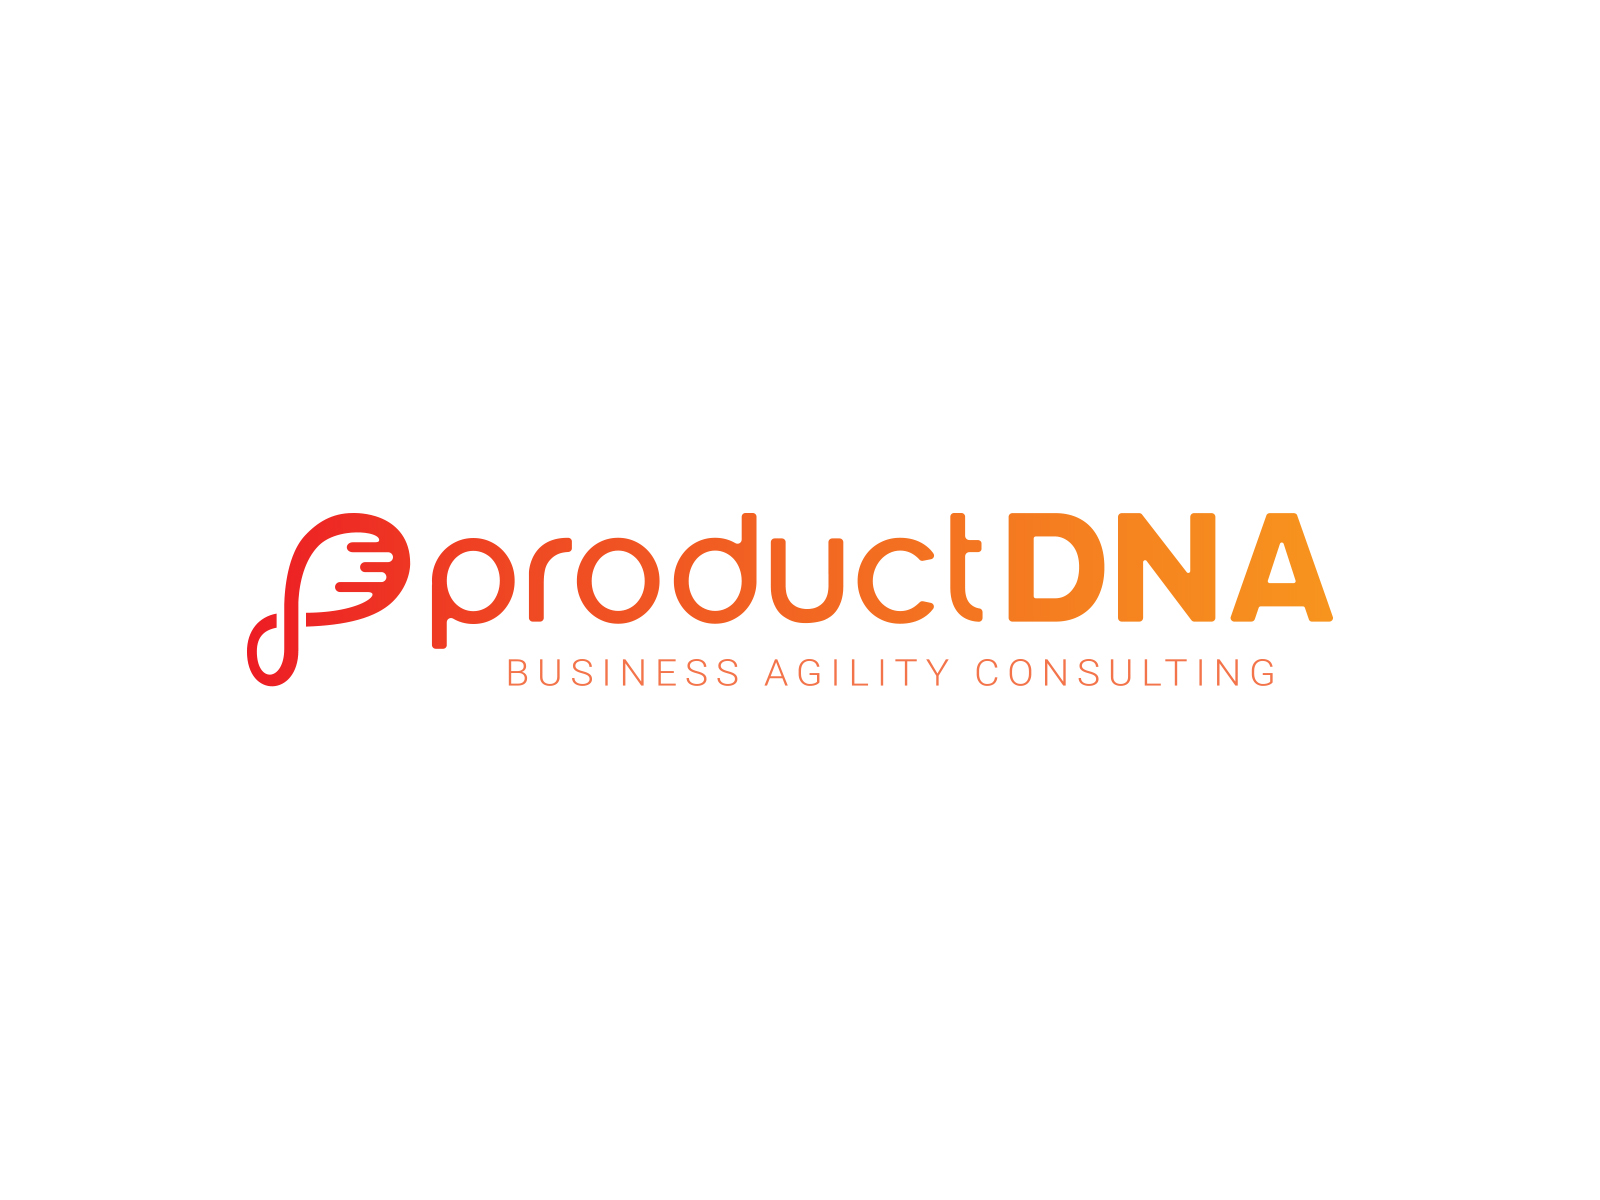 ProductDNA Branding by Rachel Ruby Raymond on Dribbble